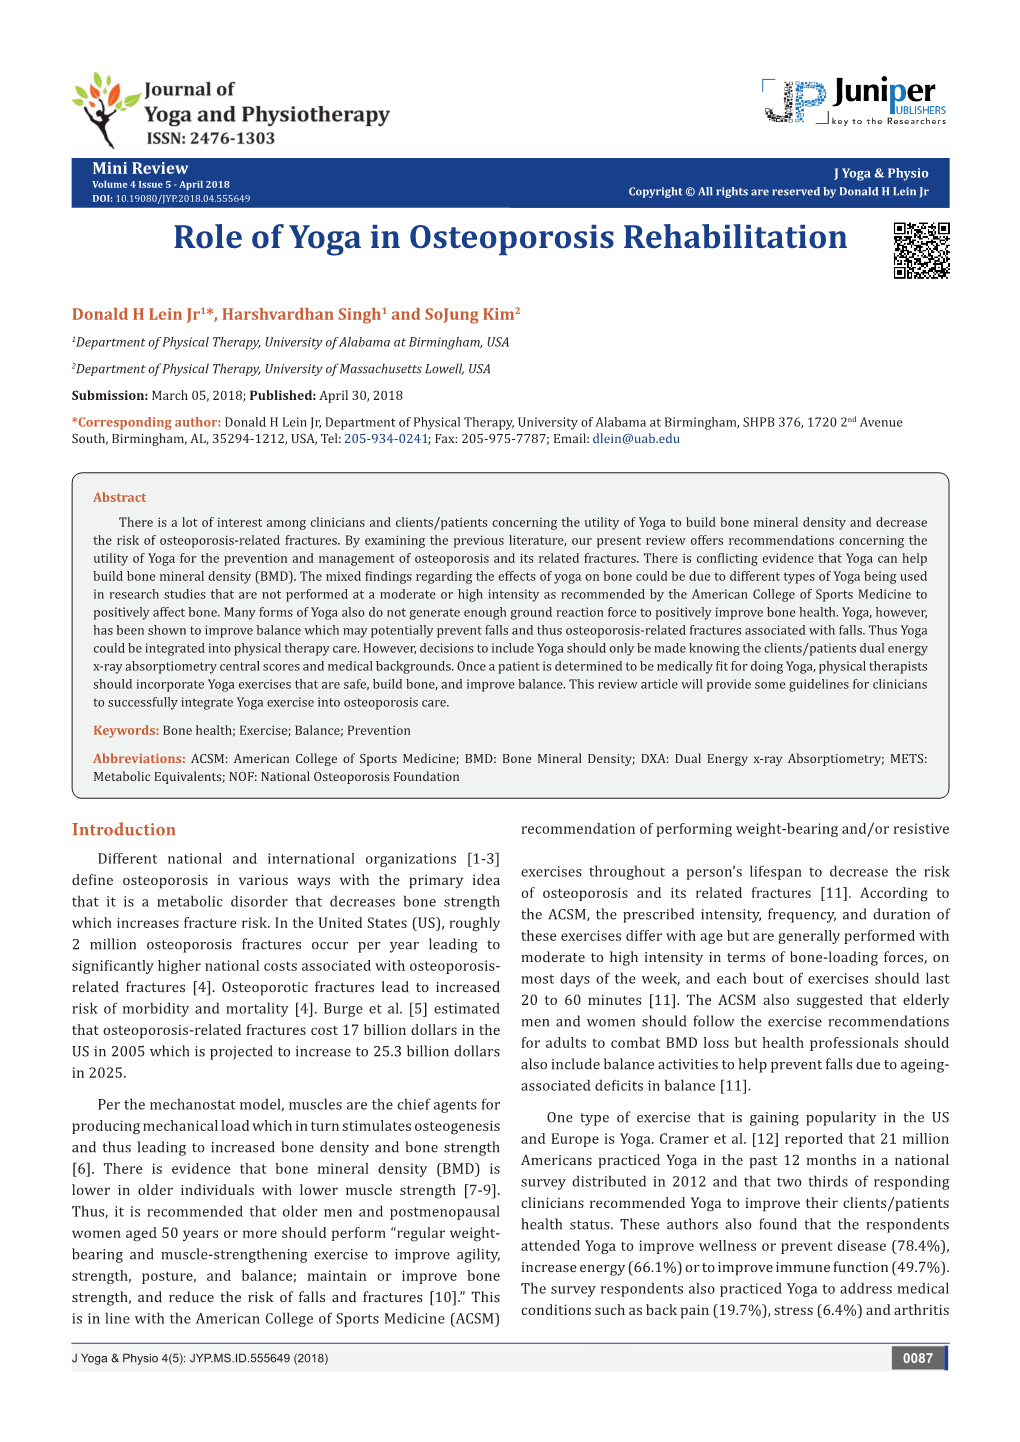 Role of Yoga in Osteoporosis Rehabilitation